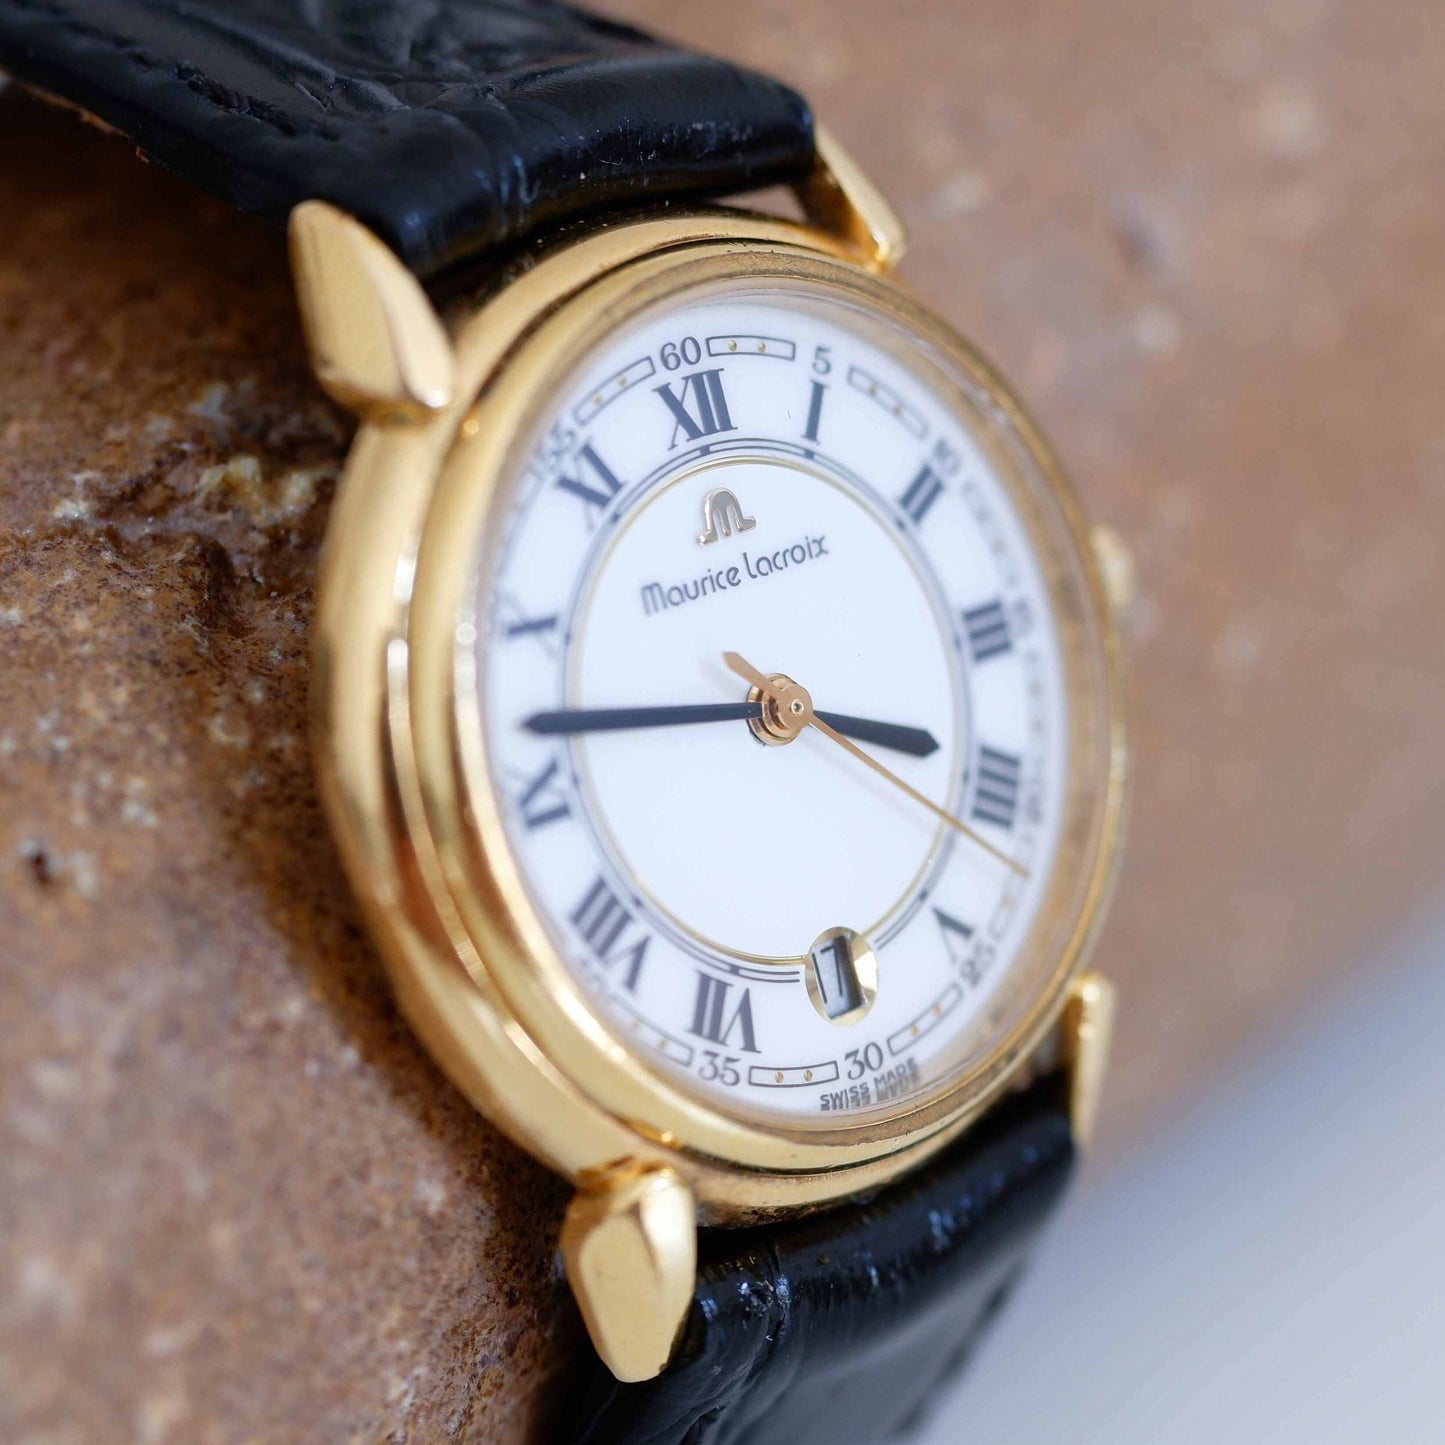 Maurice Lacroix Vintage Ladies Watch: 90s Golden with Classic Roman Numerals | Slight Left Side